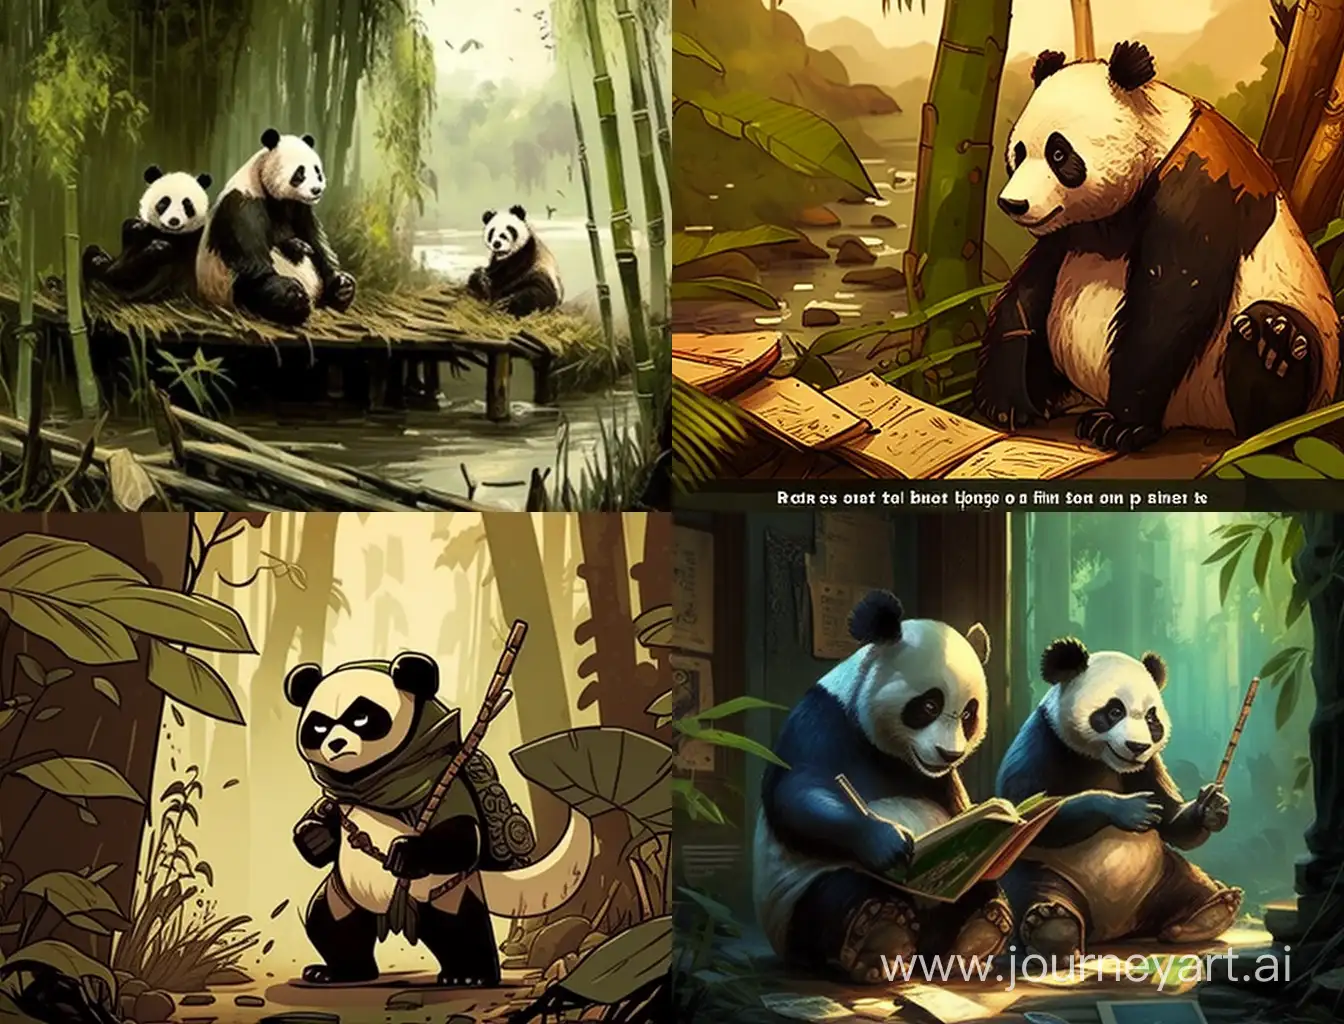 Adorable-Pandas-Enjoying-Bamboo-Feast-in-ComicInspired-Setting